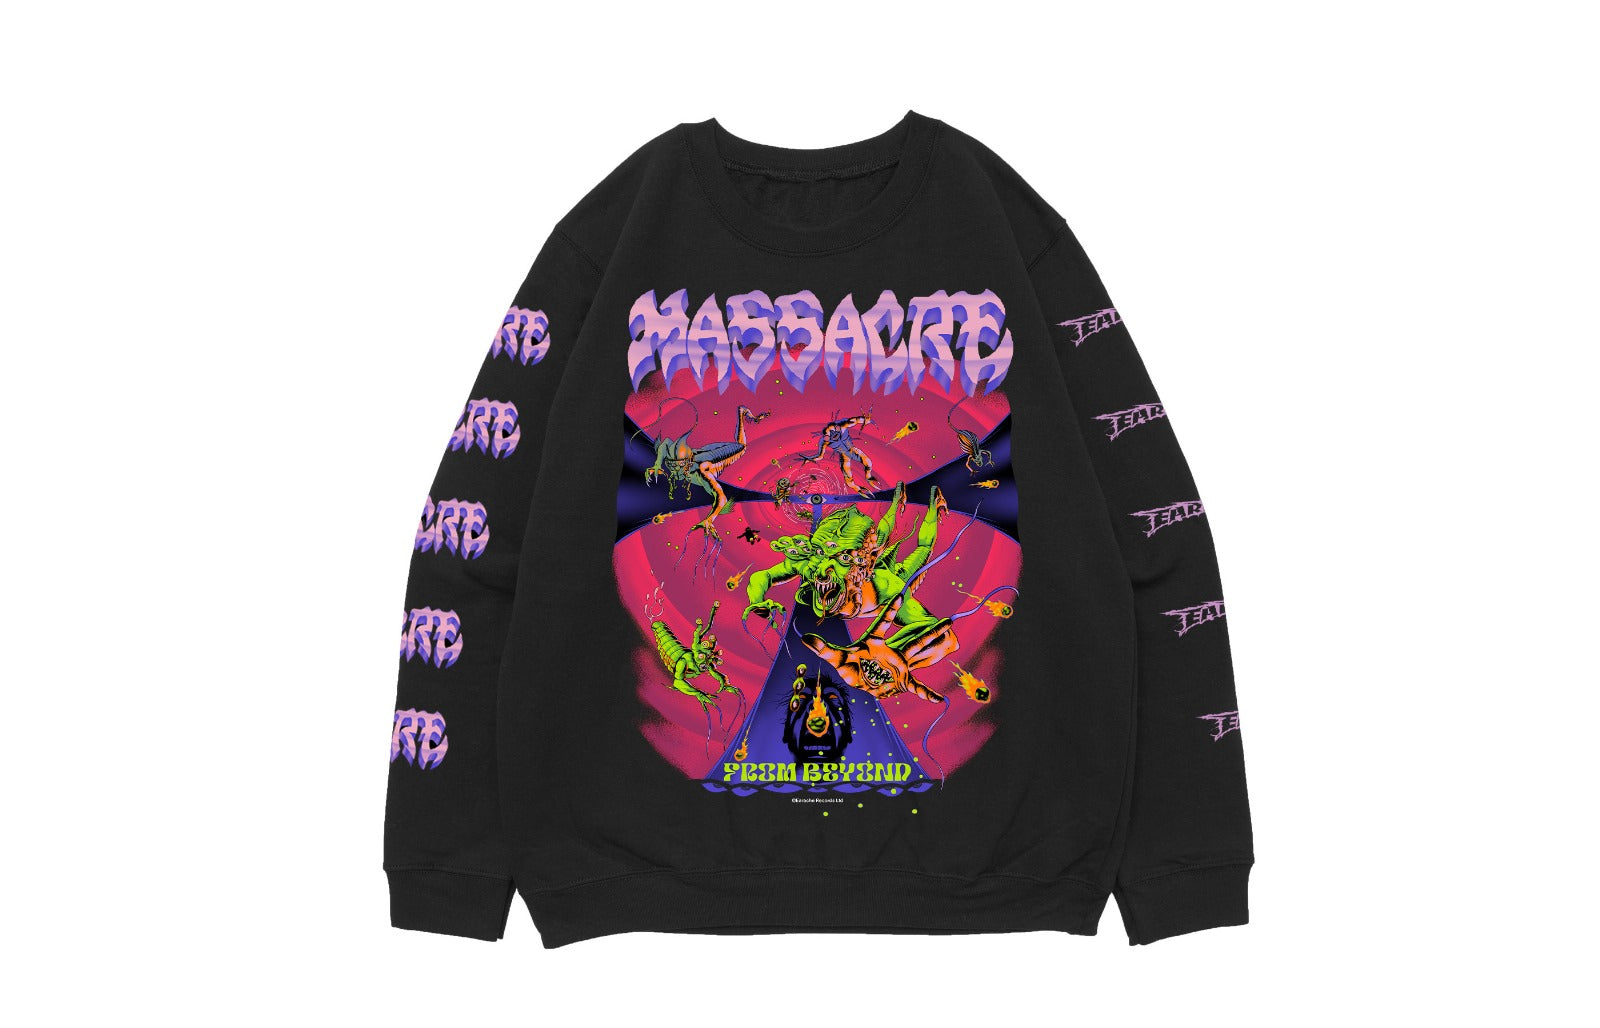 Massacre "From Beyond 2024 Ltd Edition" Crew Neck Sweatshirt